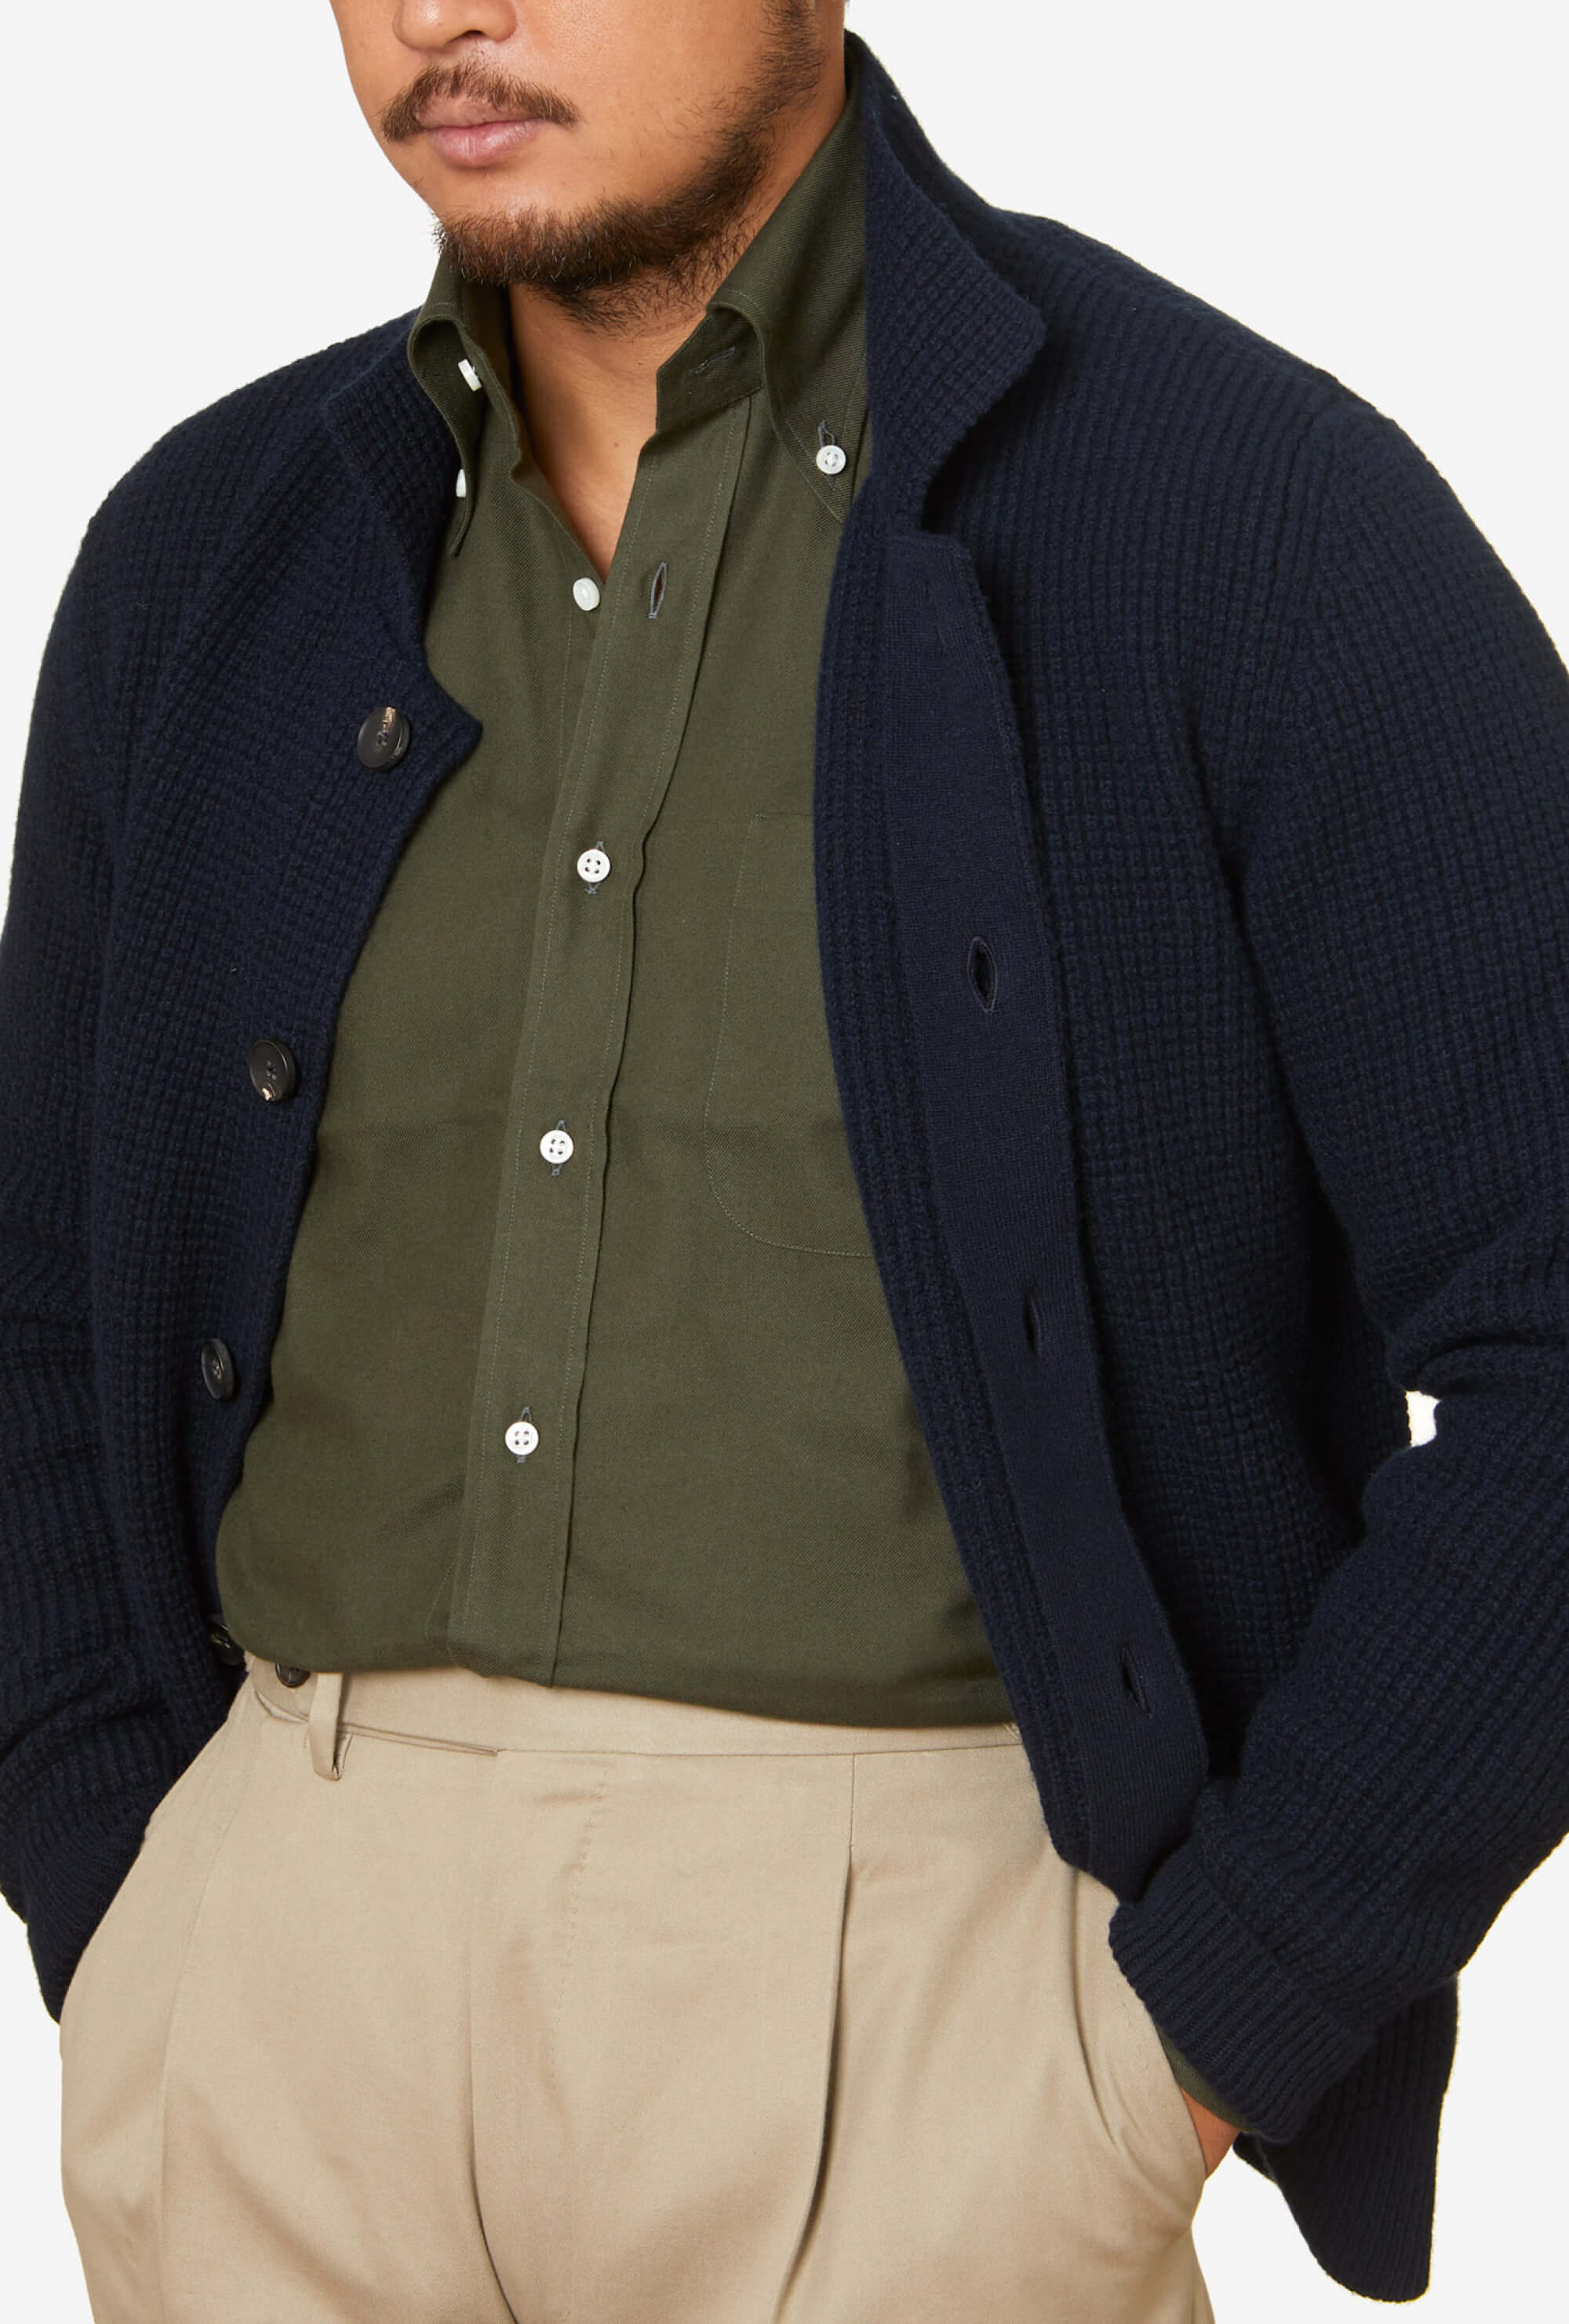 Button-Through Cardigan Wool Cashmere Navy